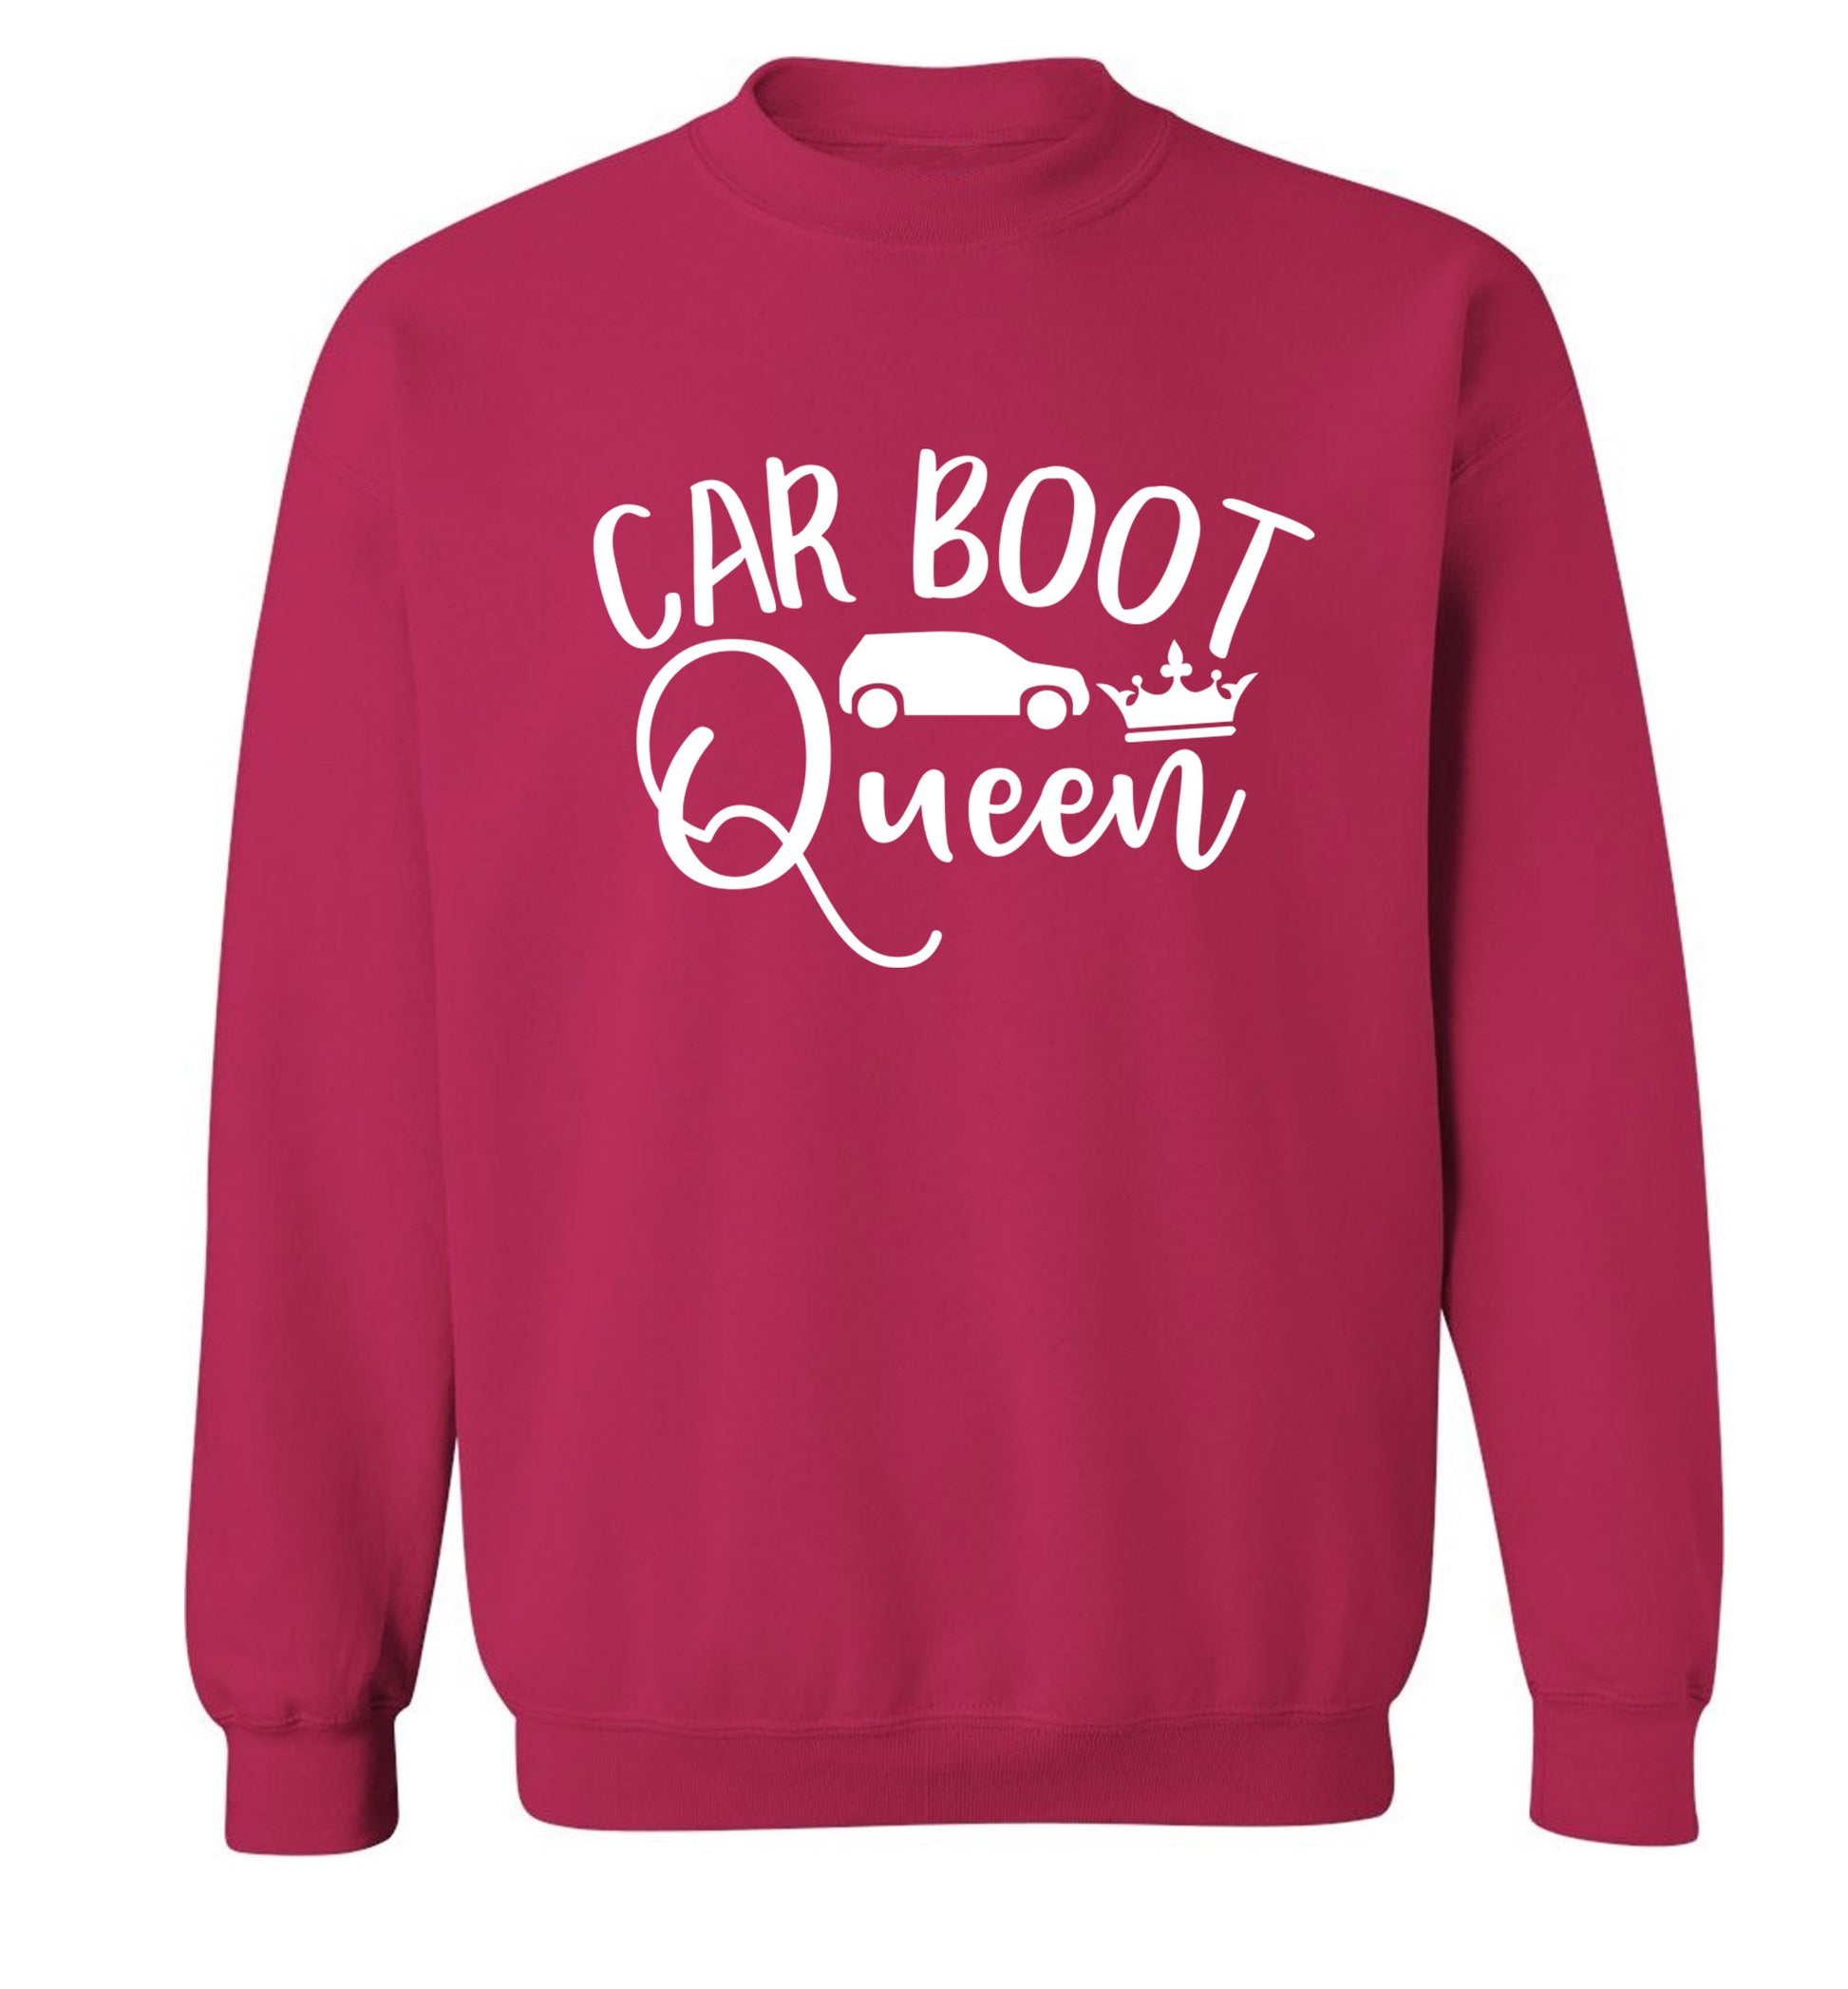 Carboot Queen Adult's unisex pink Sweater 2XL